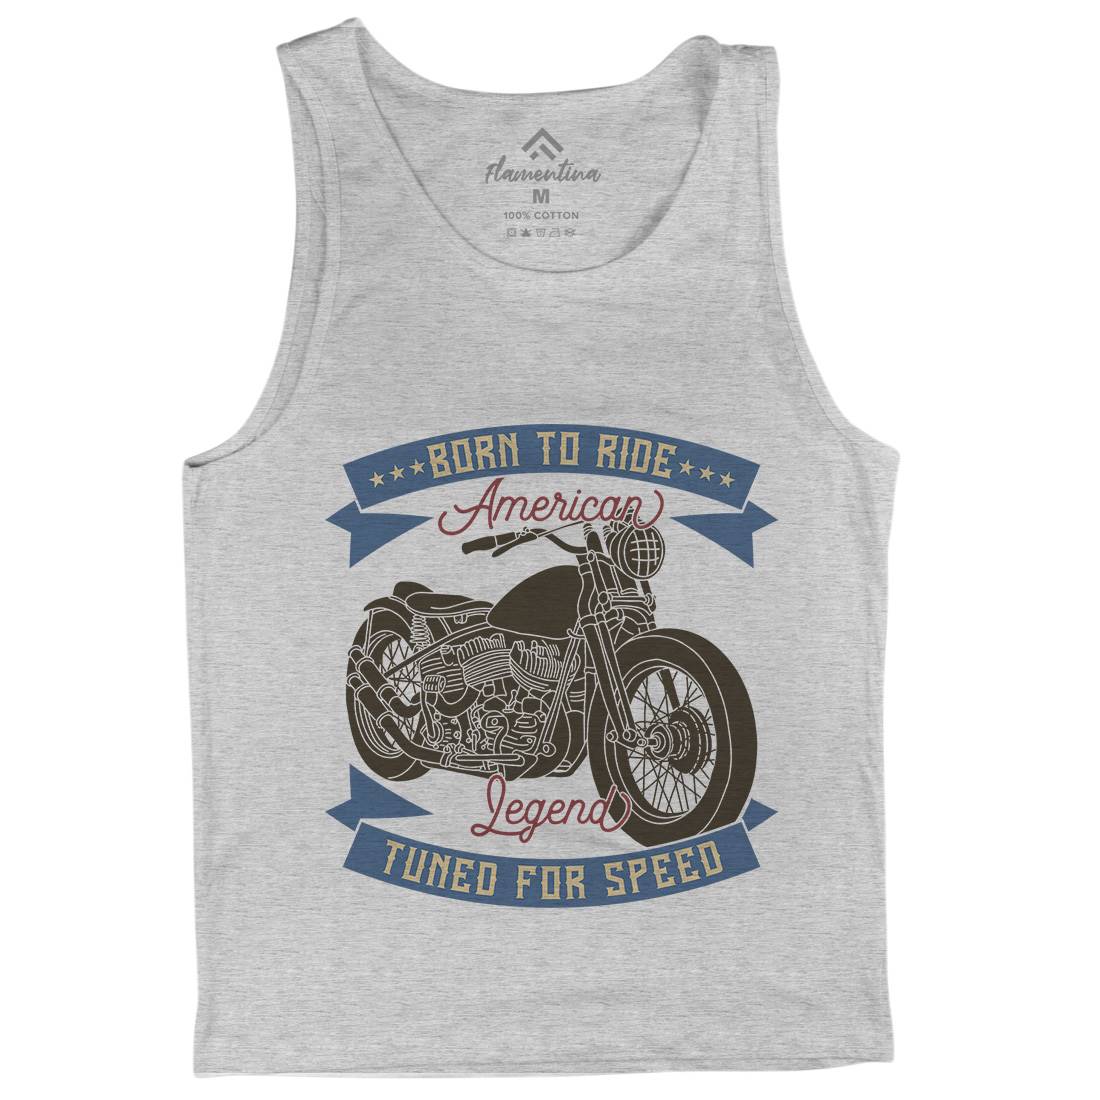 Legend Mens Tank Top Vest Motorcycles B322